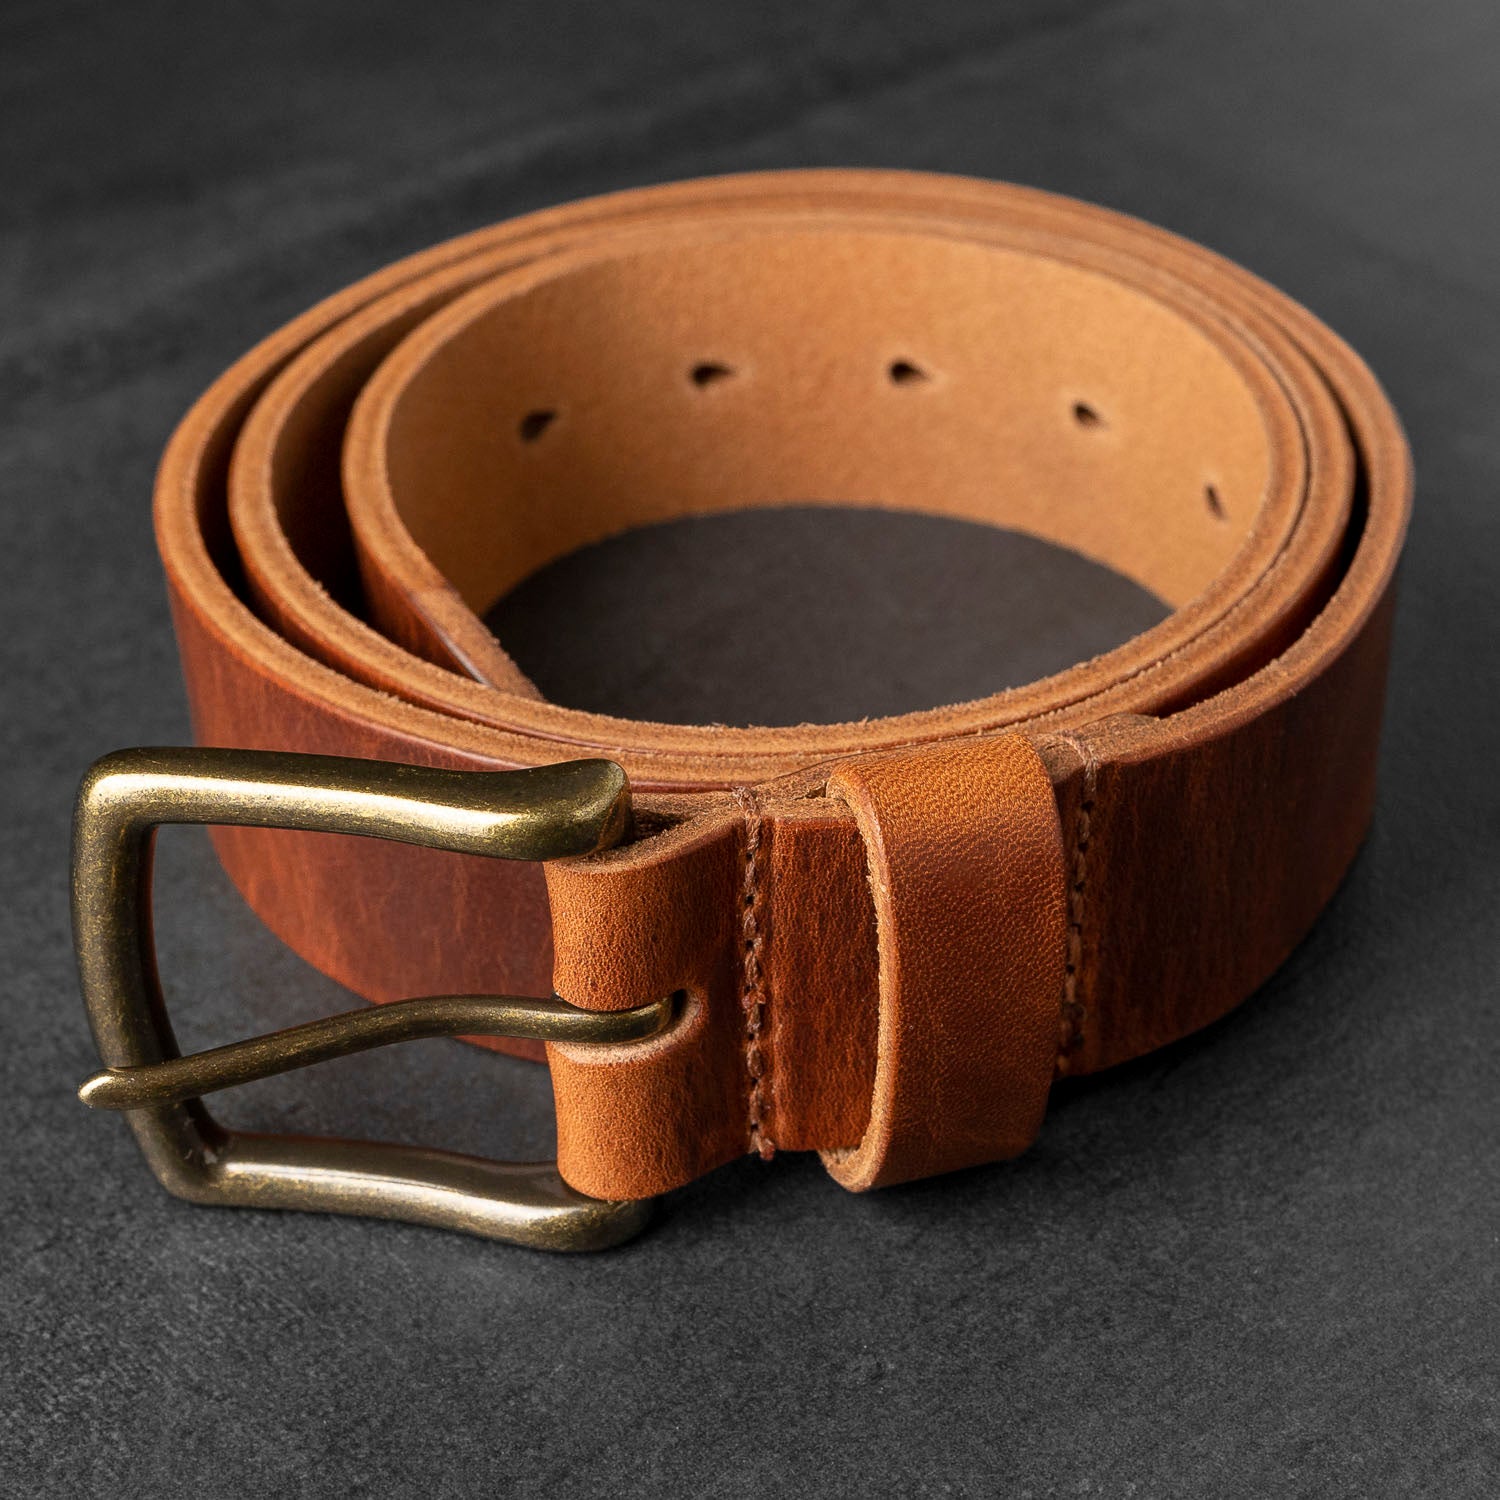 leather belt size